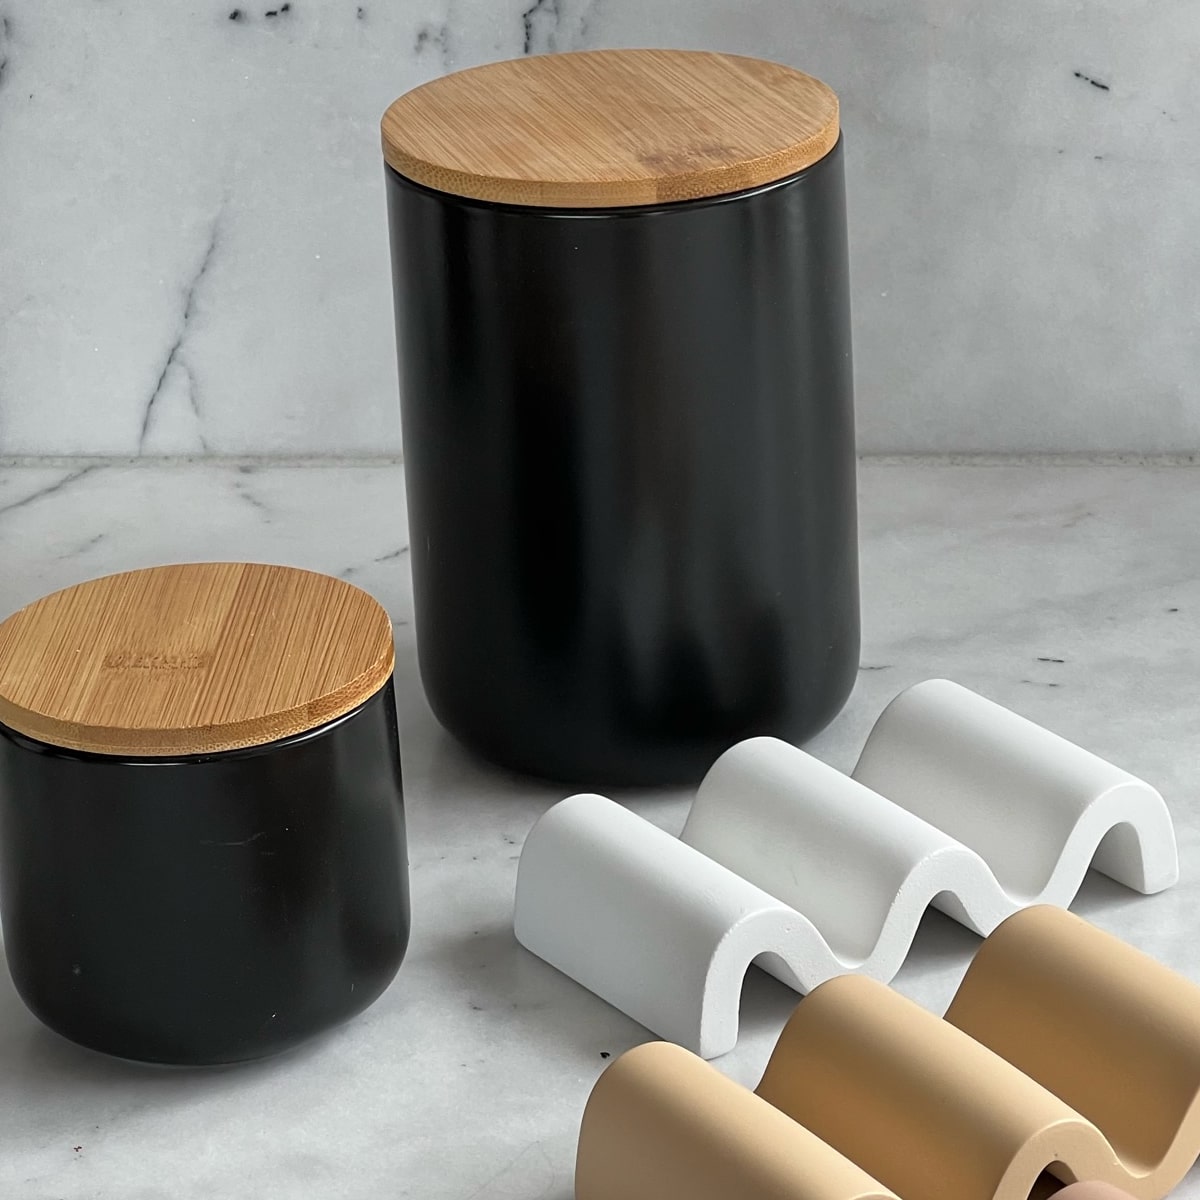 Ventoux Ceramic Jar - Buy Tools Online at FRANKY'S